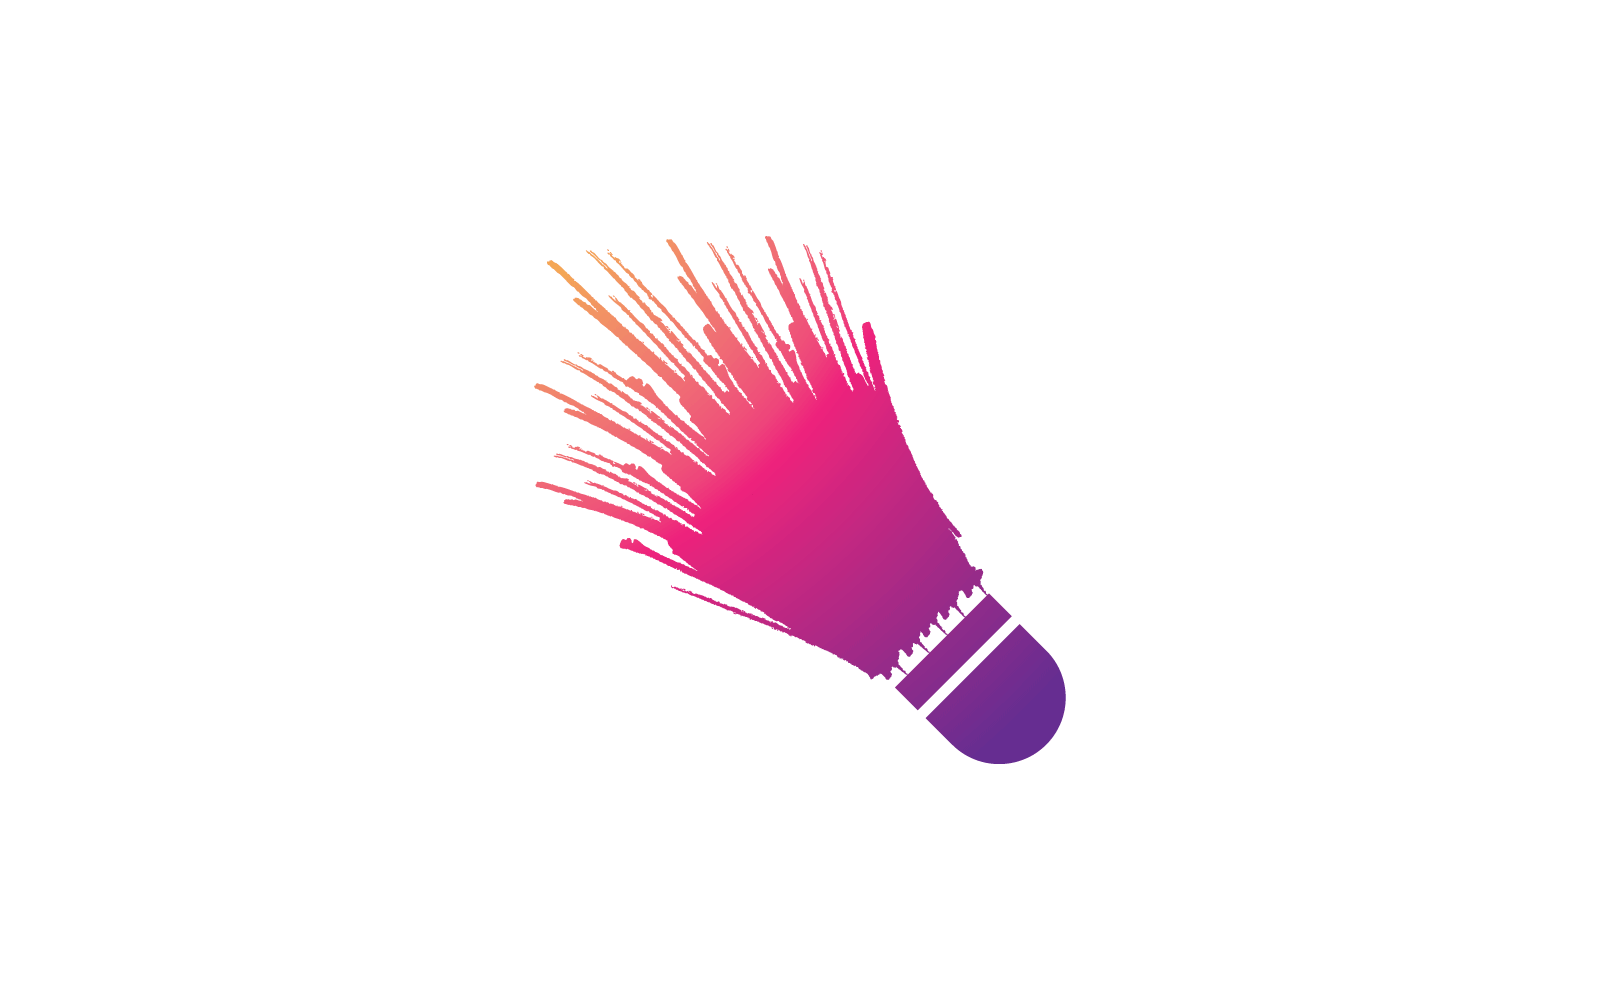 Suttle cock badminton logo vector design illustration